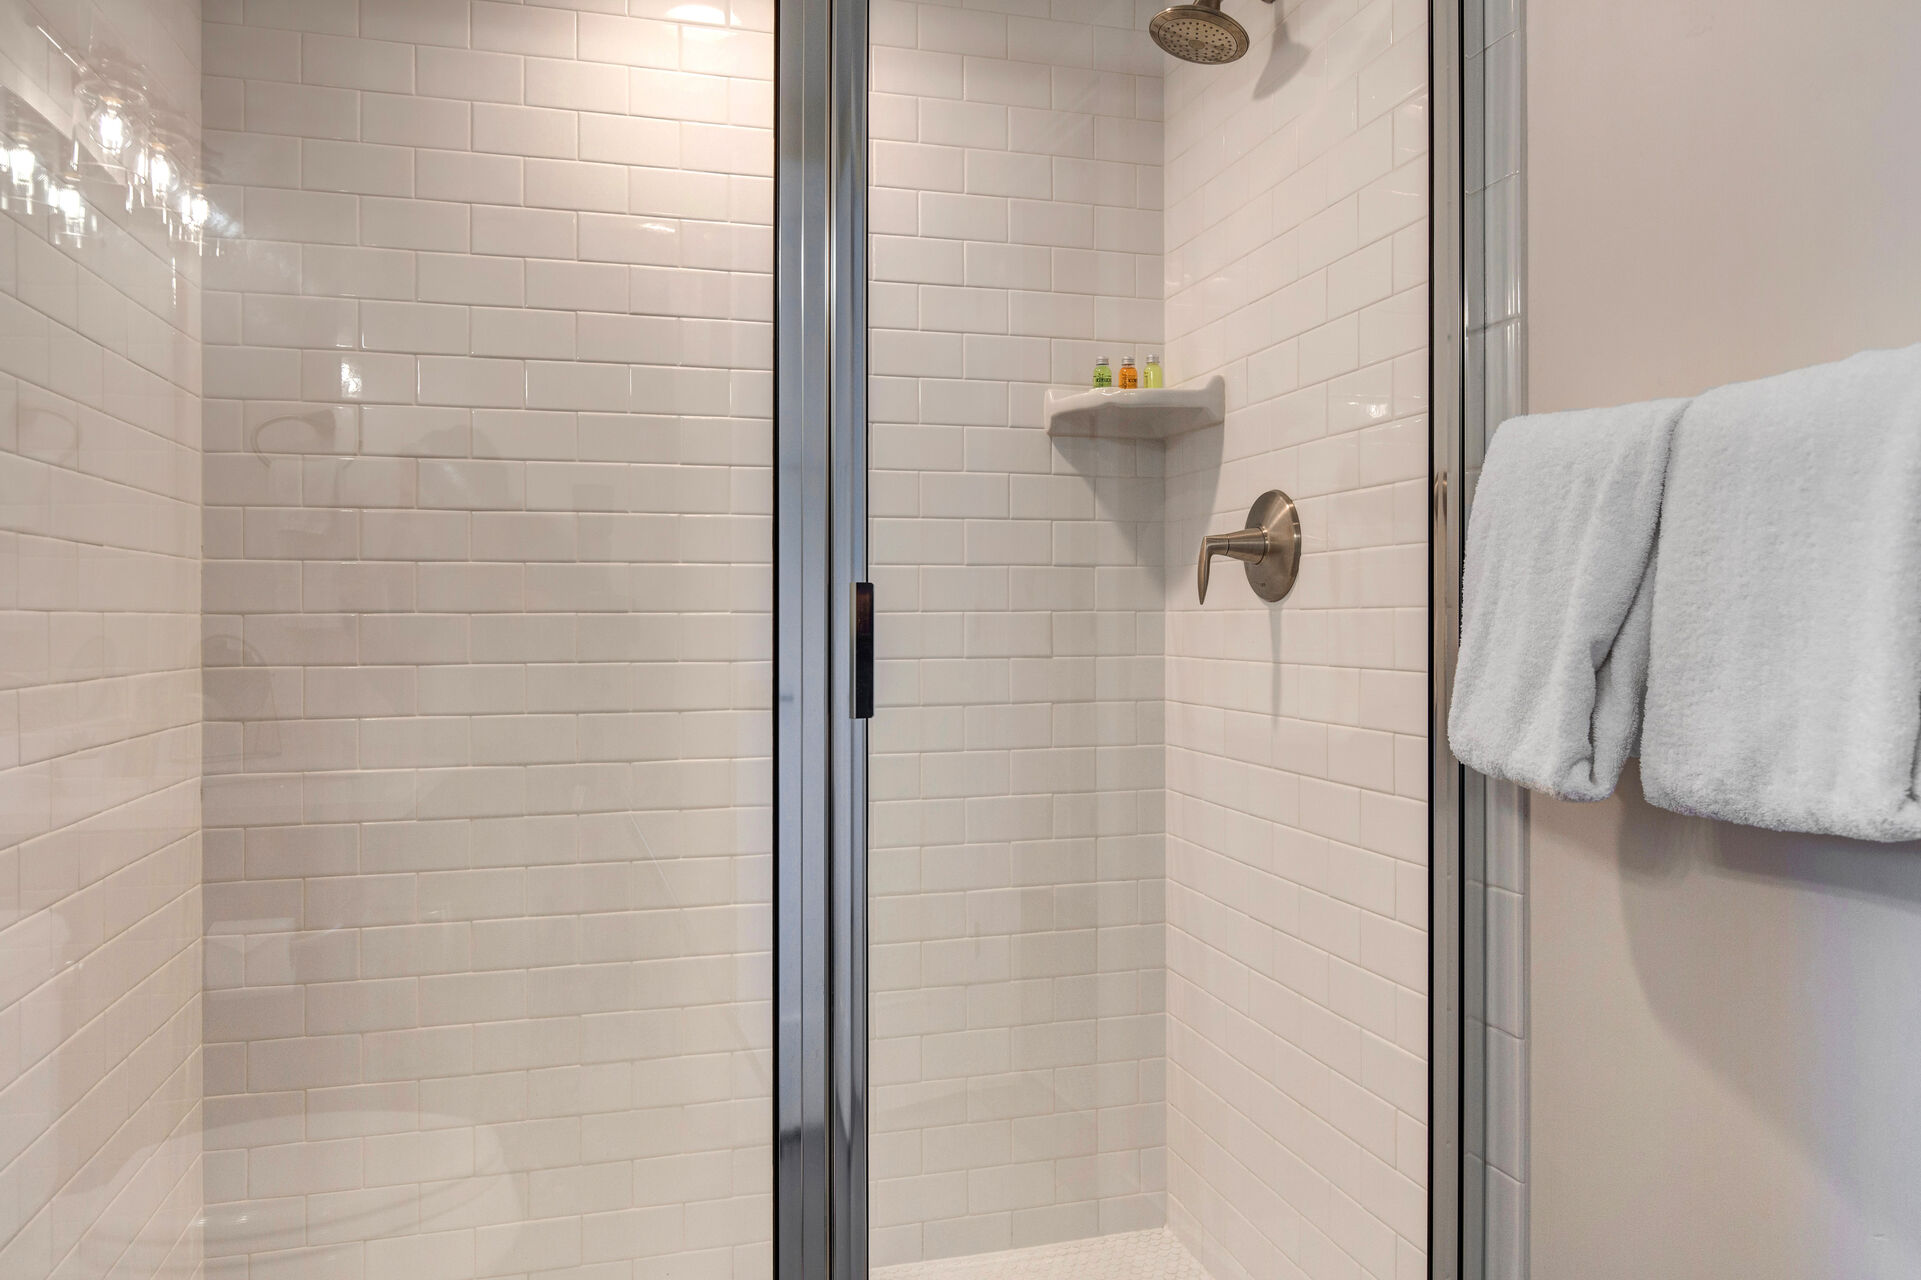 Lower Level full bathroom with large tiled shower